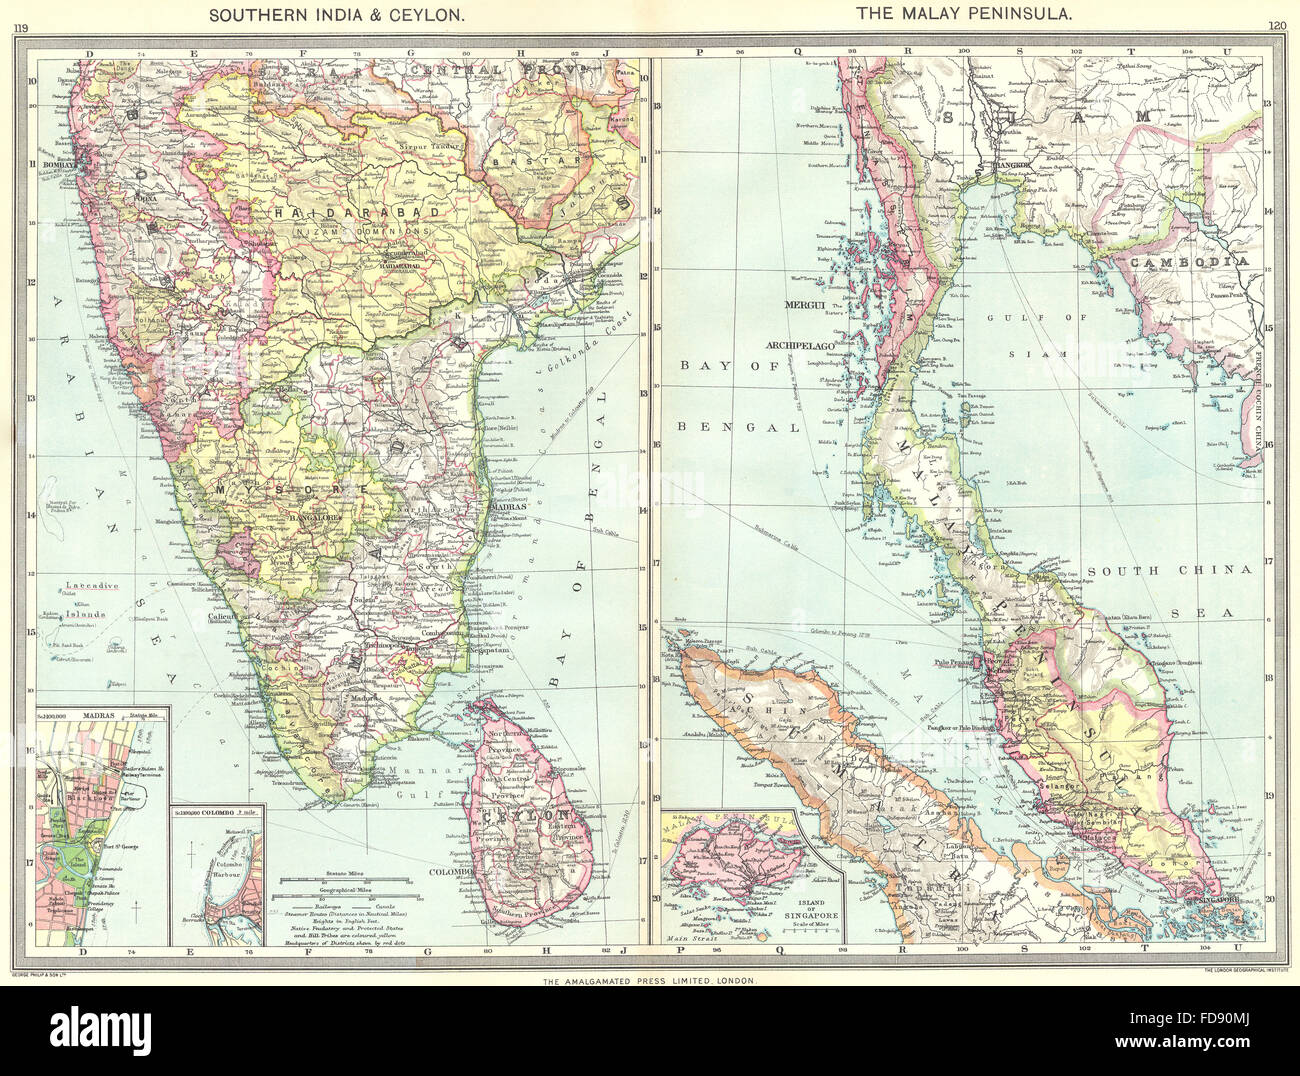 SOUTH INDIA: Sri Lanka; Malay Peninsula; Chennai; Colombo; Singapore, 1907 map Stock Photo